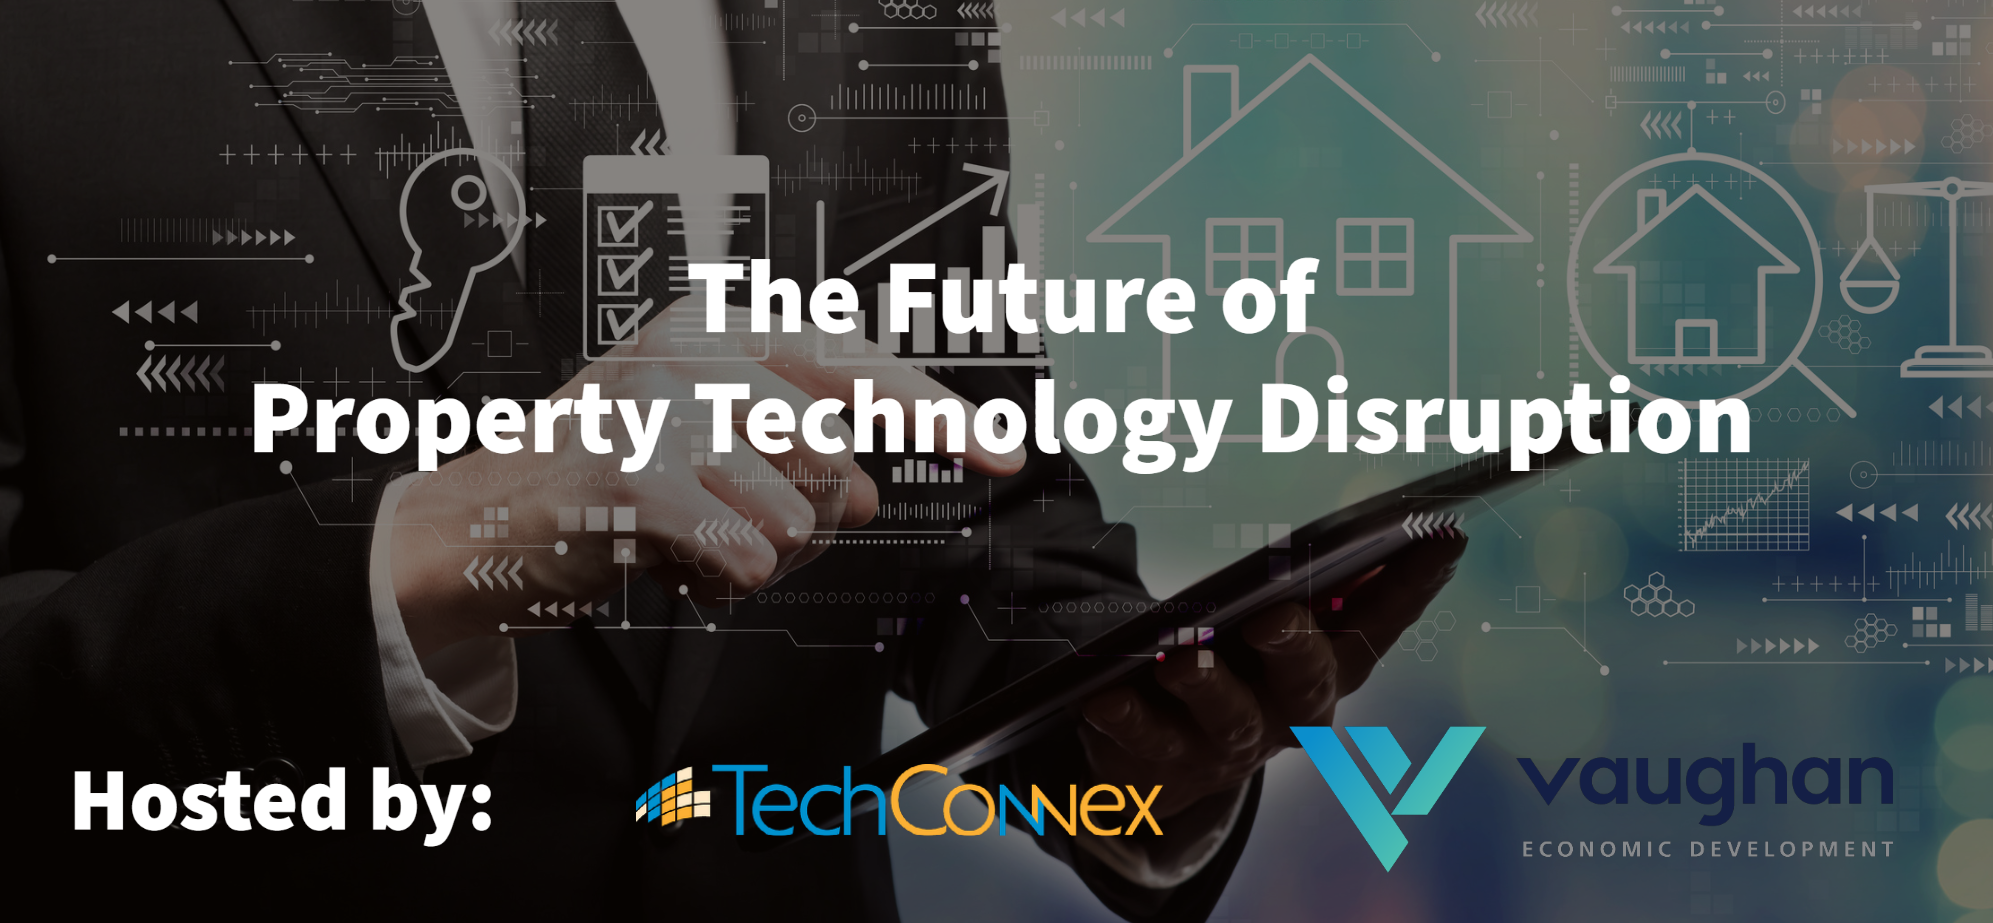 Future of Prop Tech Disruption (1)